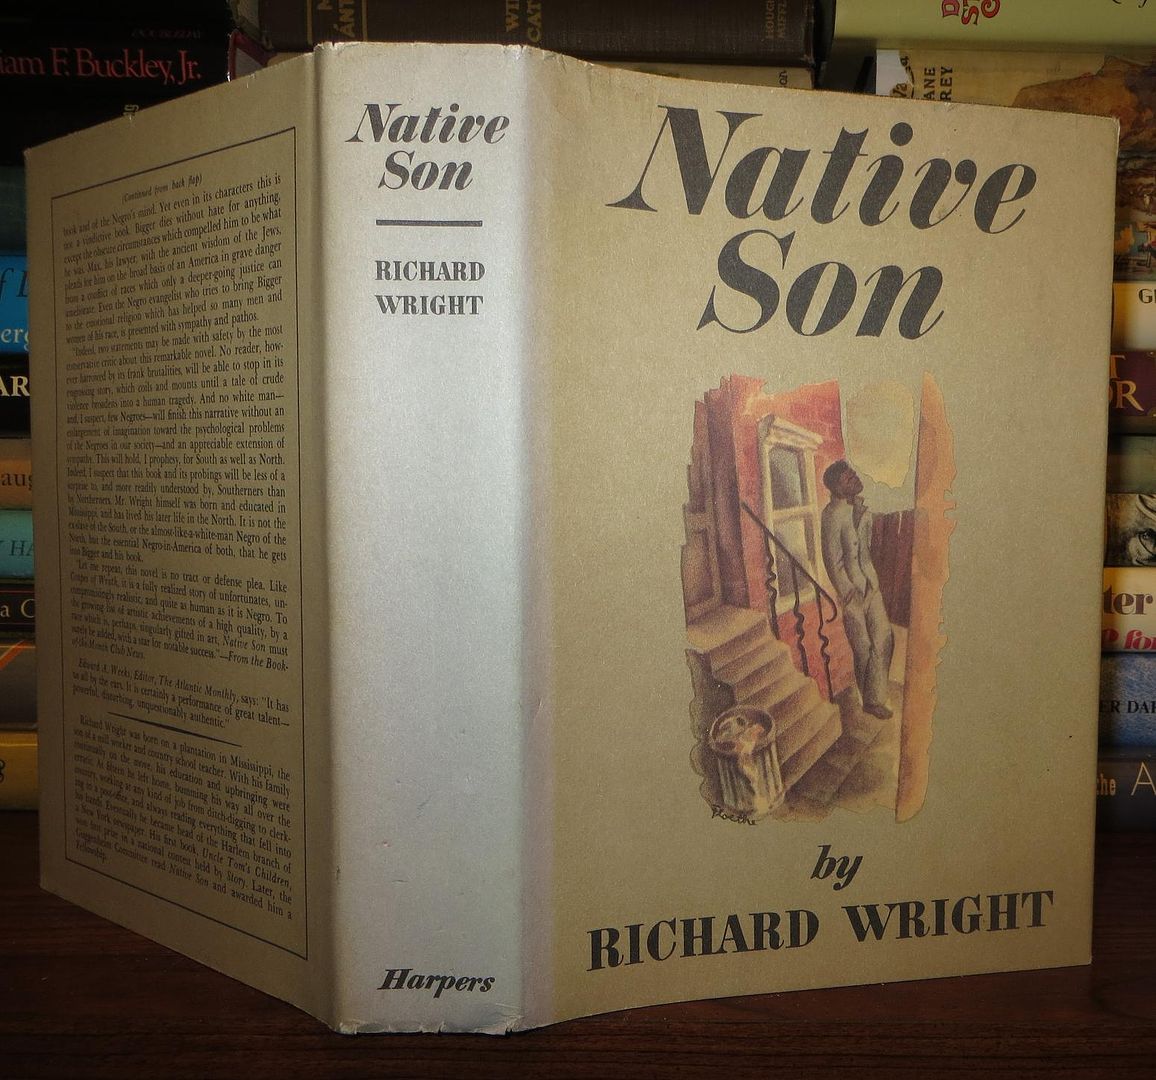 RICHARD WRIGHT - Native Son